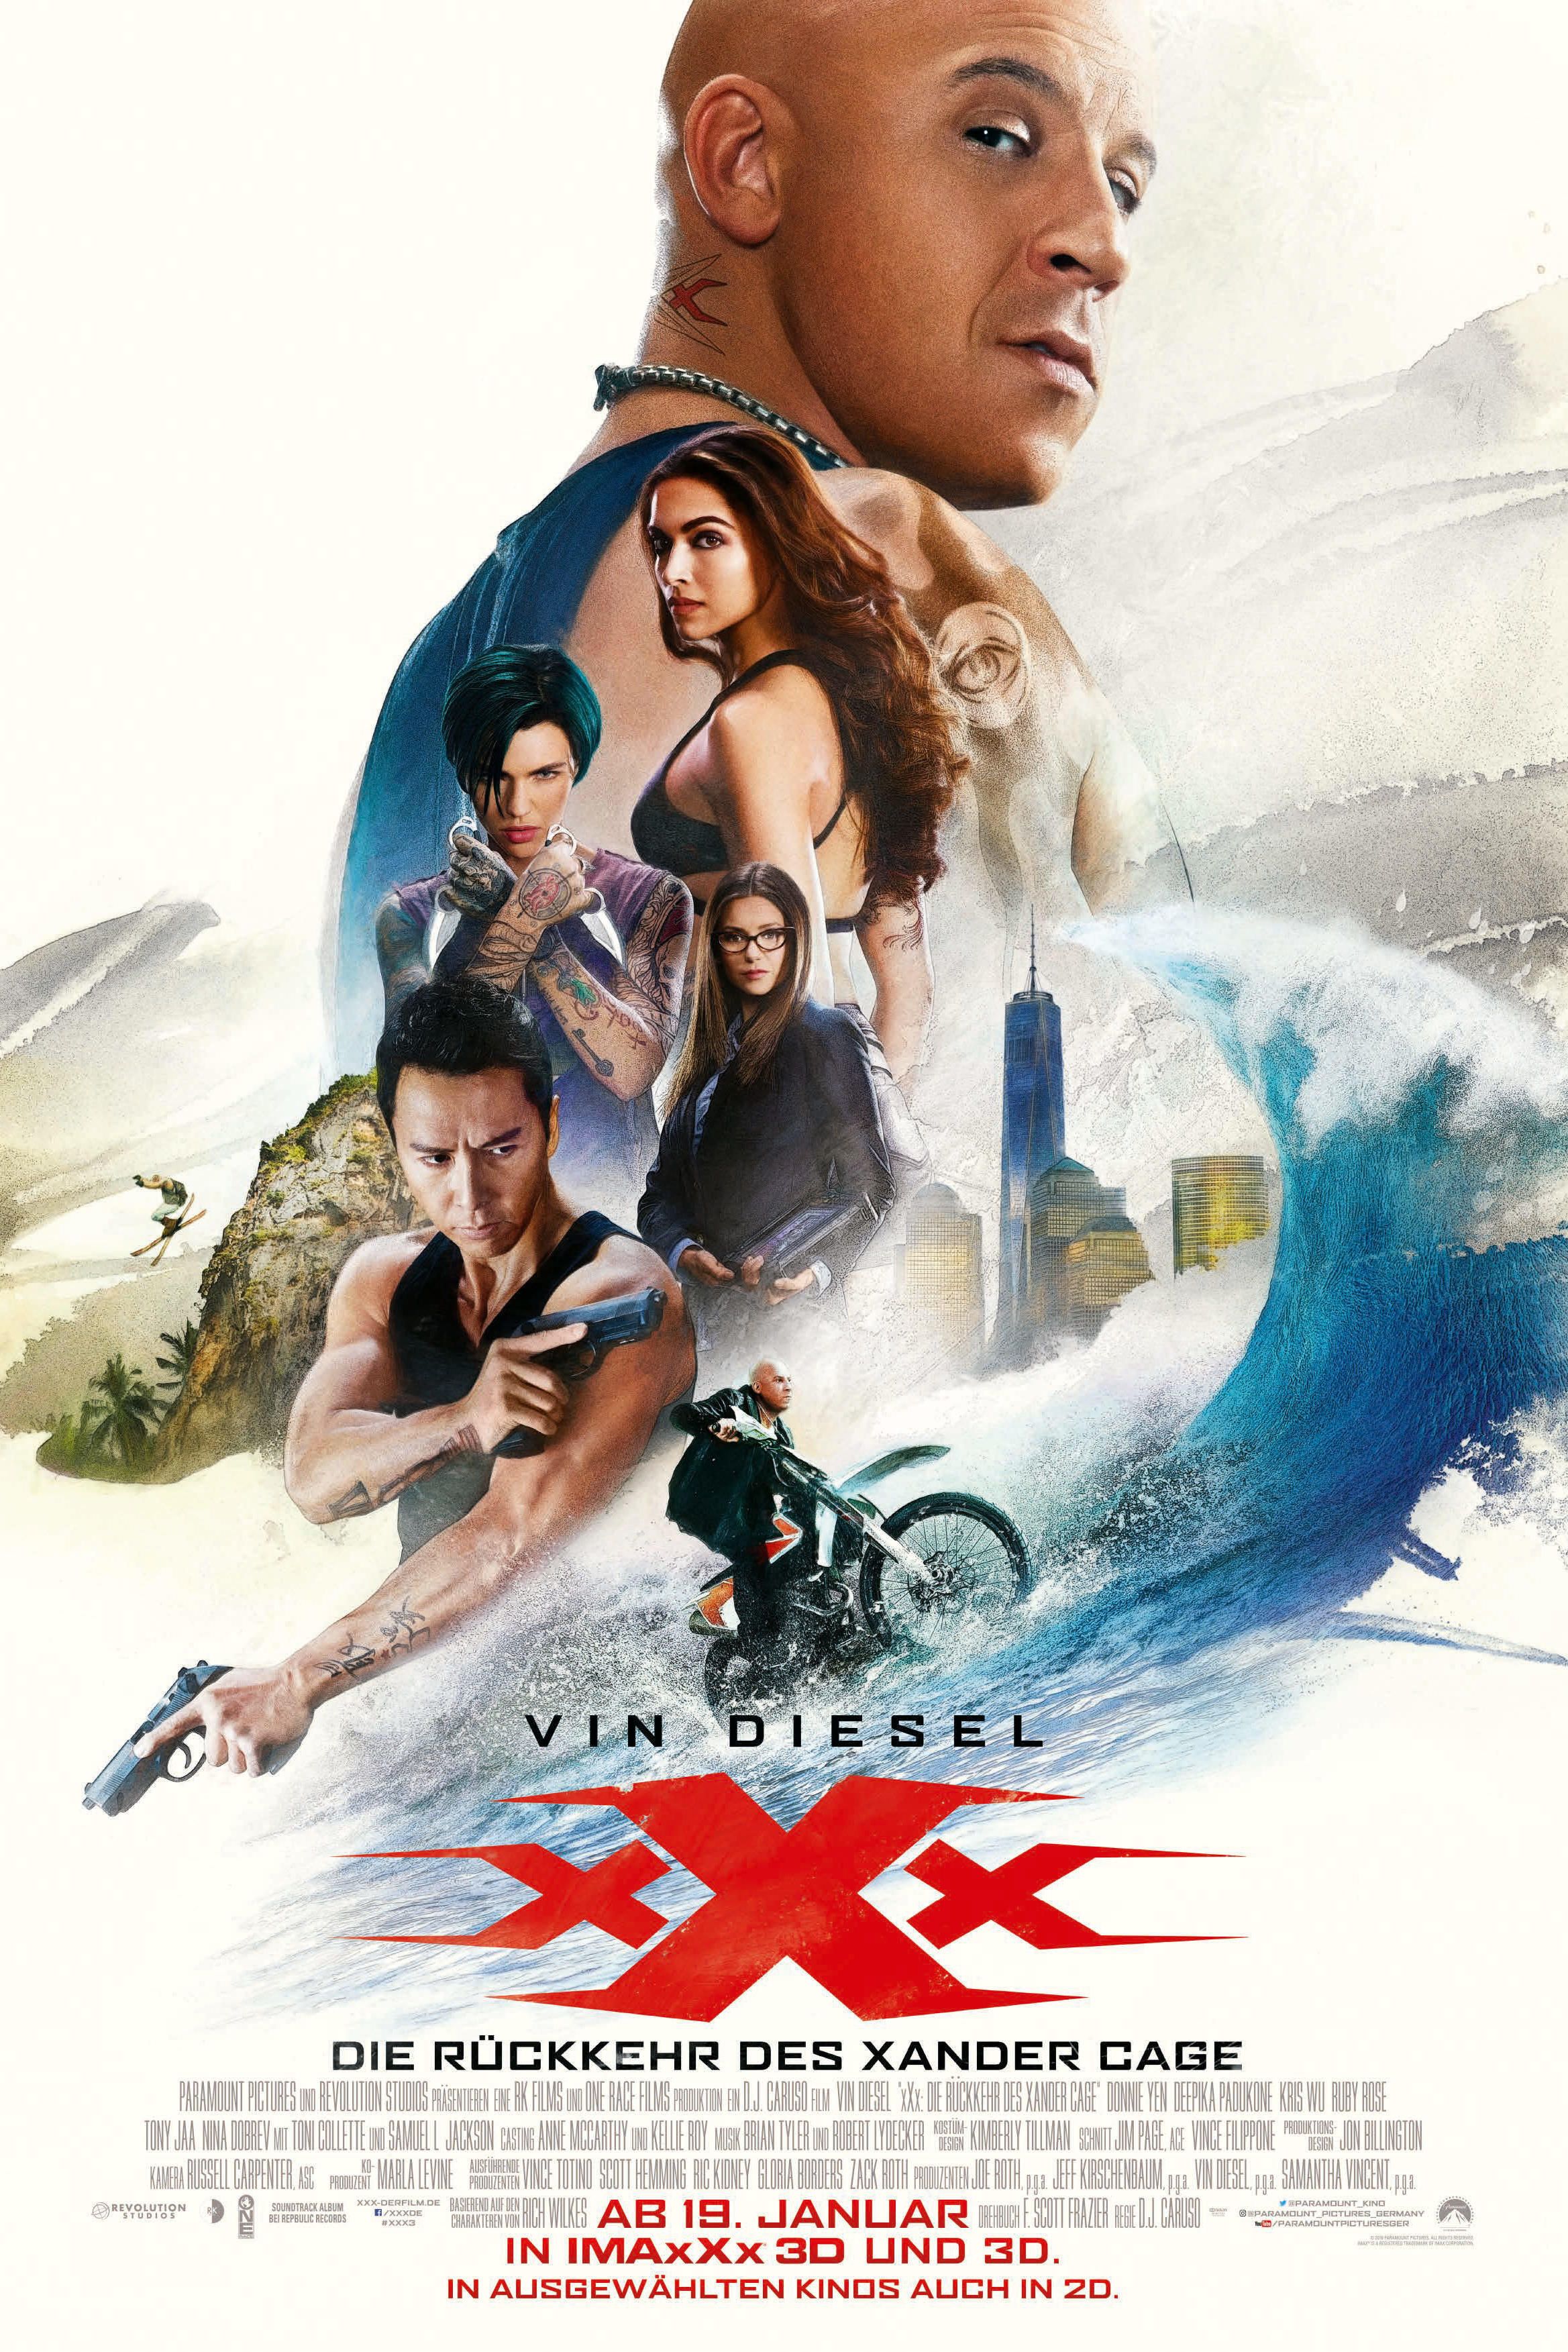 xXx: Return of Xander Cage (2017) Movie Information & Trailers | KinoCheck